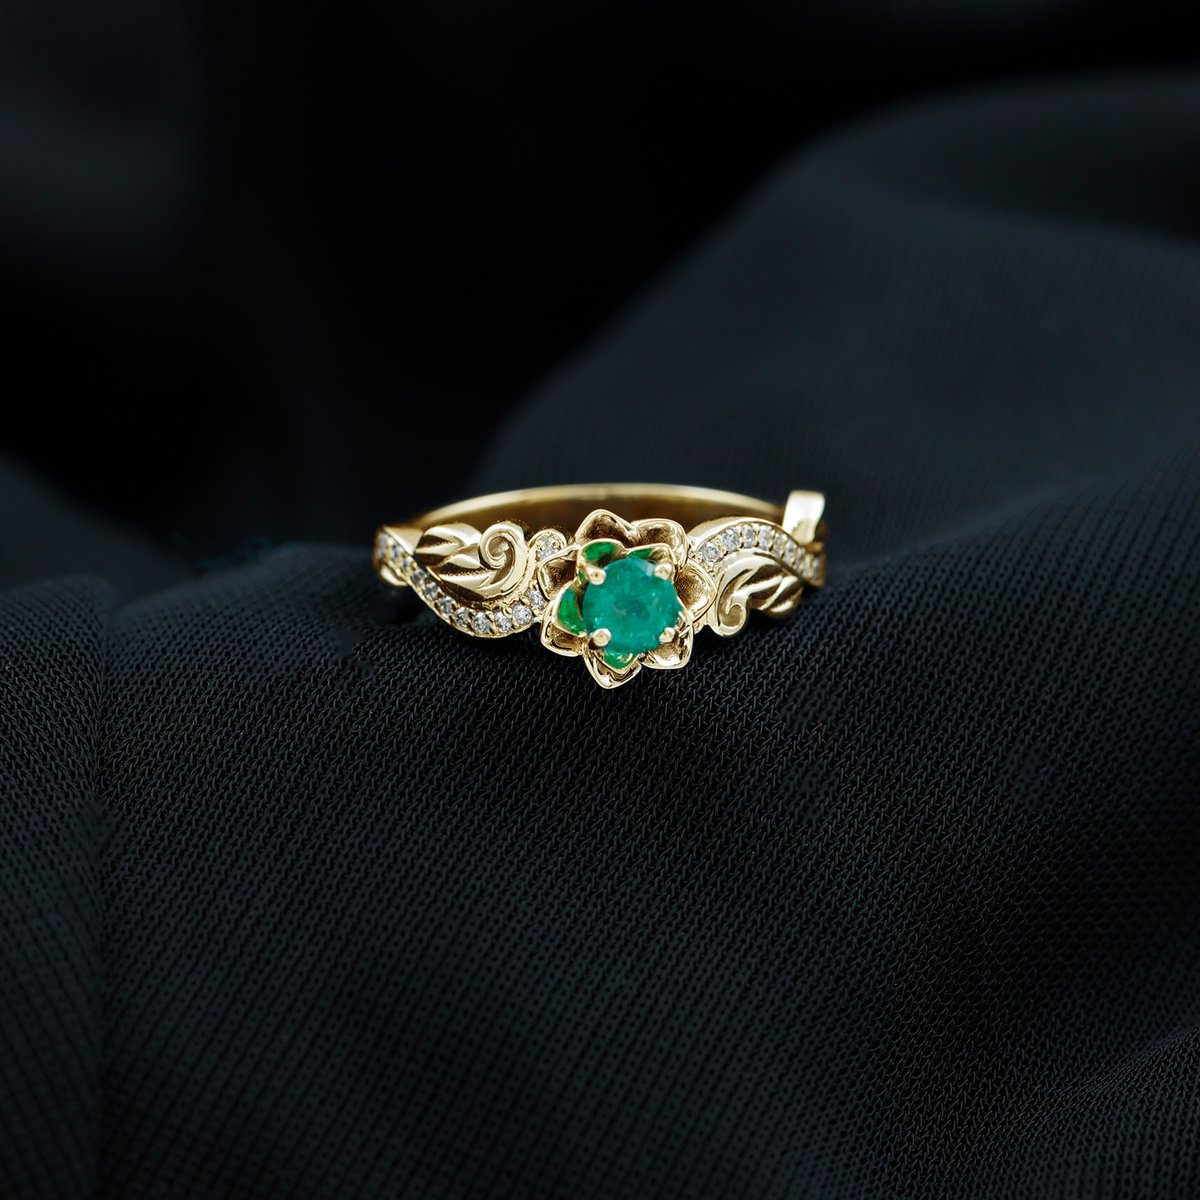 amazon.com/dp/B0B4G79MC9

#ring #emeraldring #emerald #gemstone #jewelry #emeraldjewelry #floralring #engagementring #emeraldengagementring #ringstyle